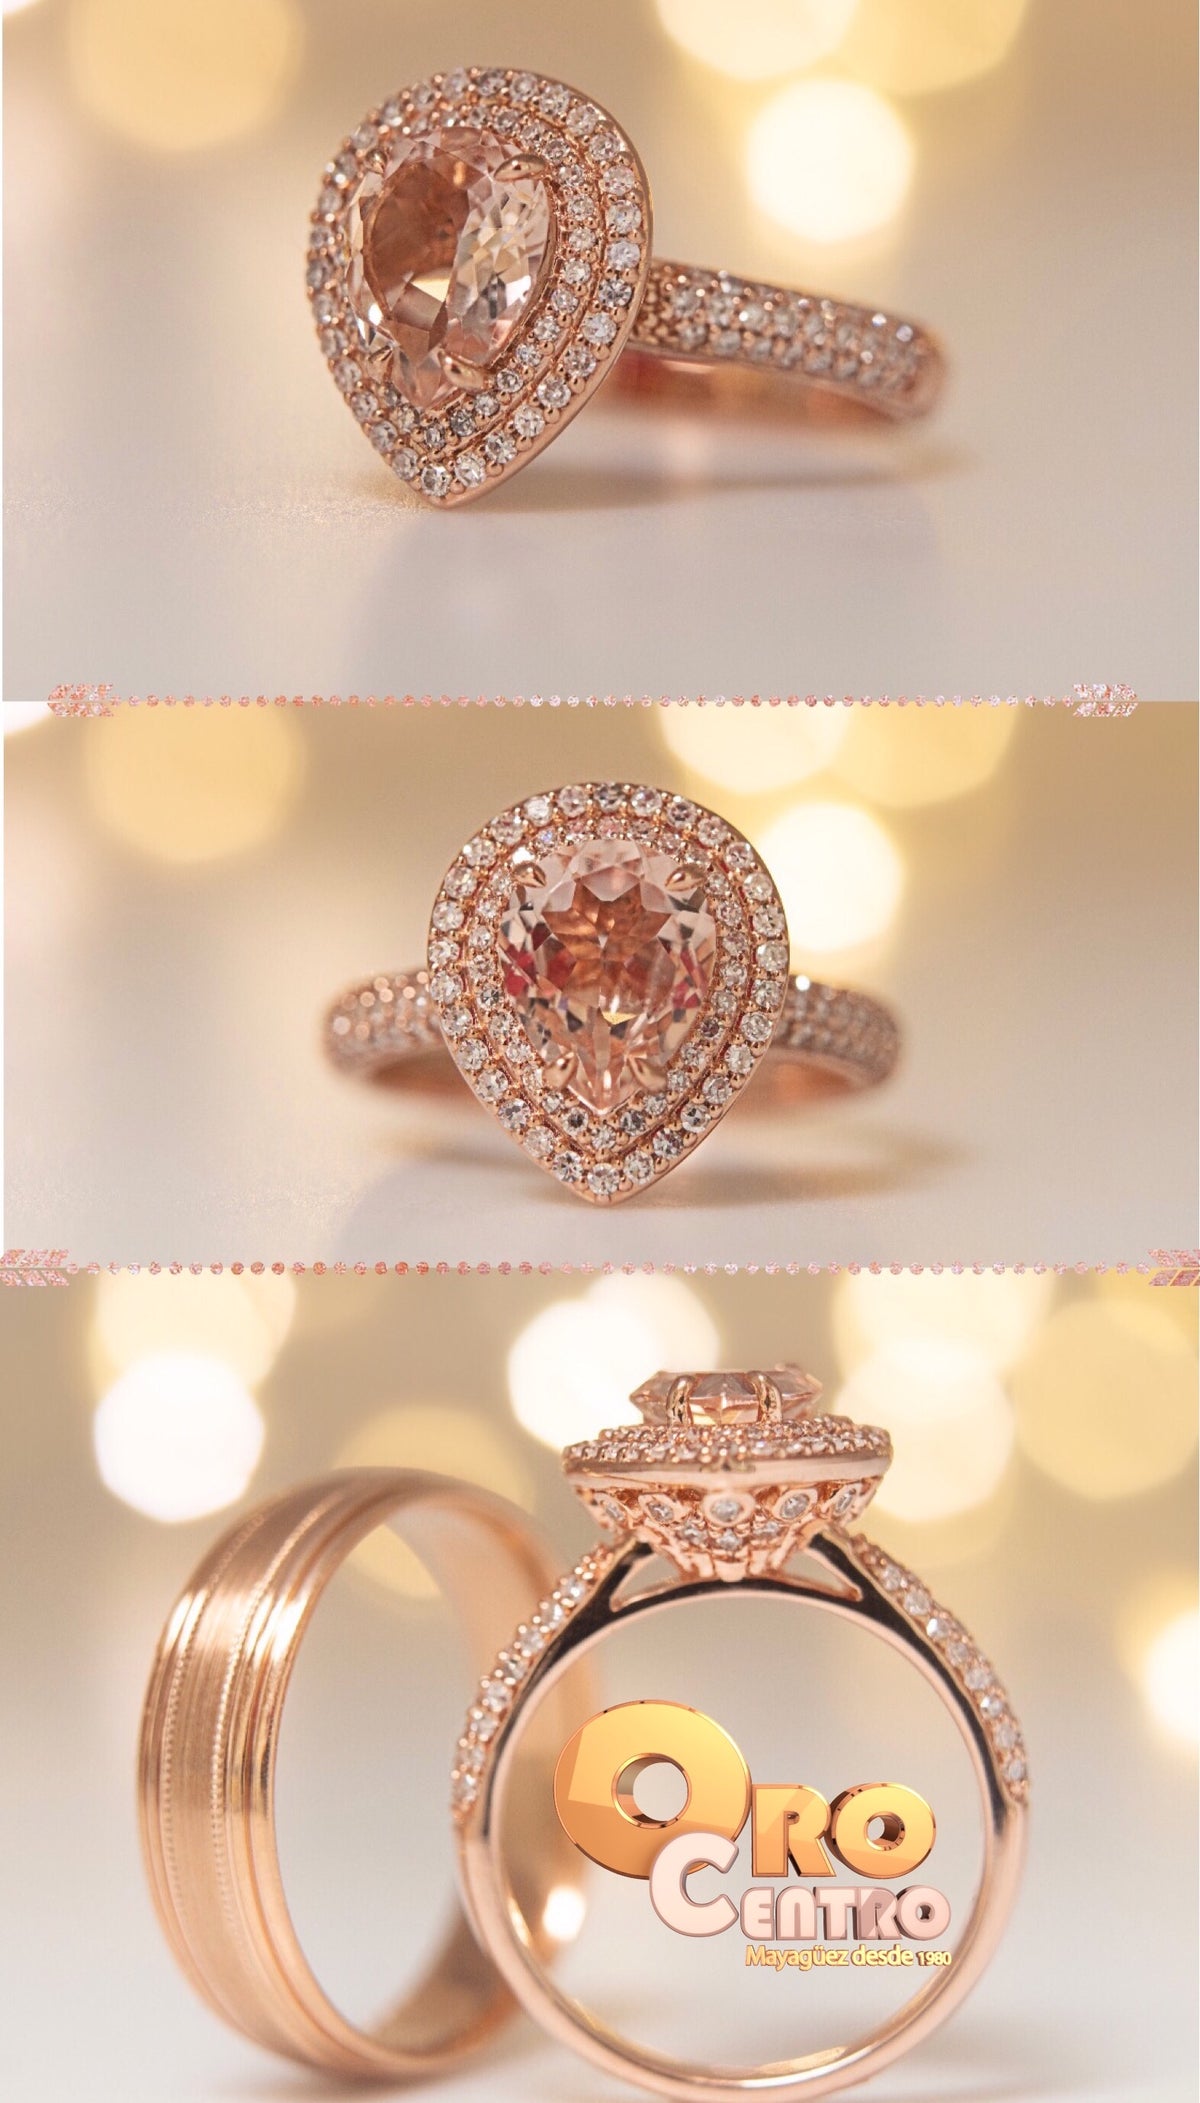 Rose gold diamonds and morganite engagement ring